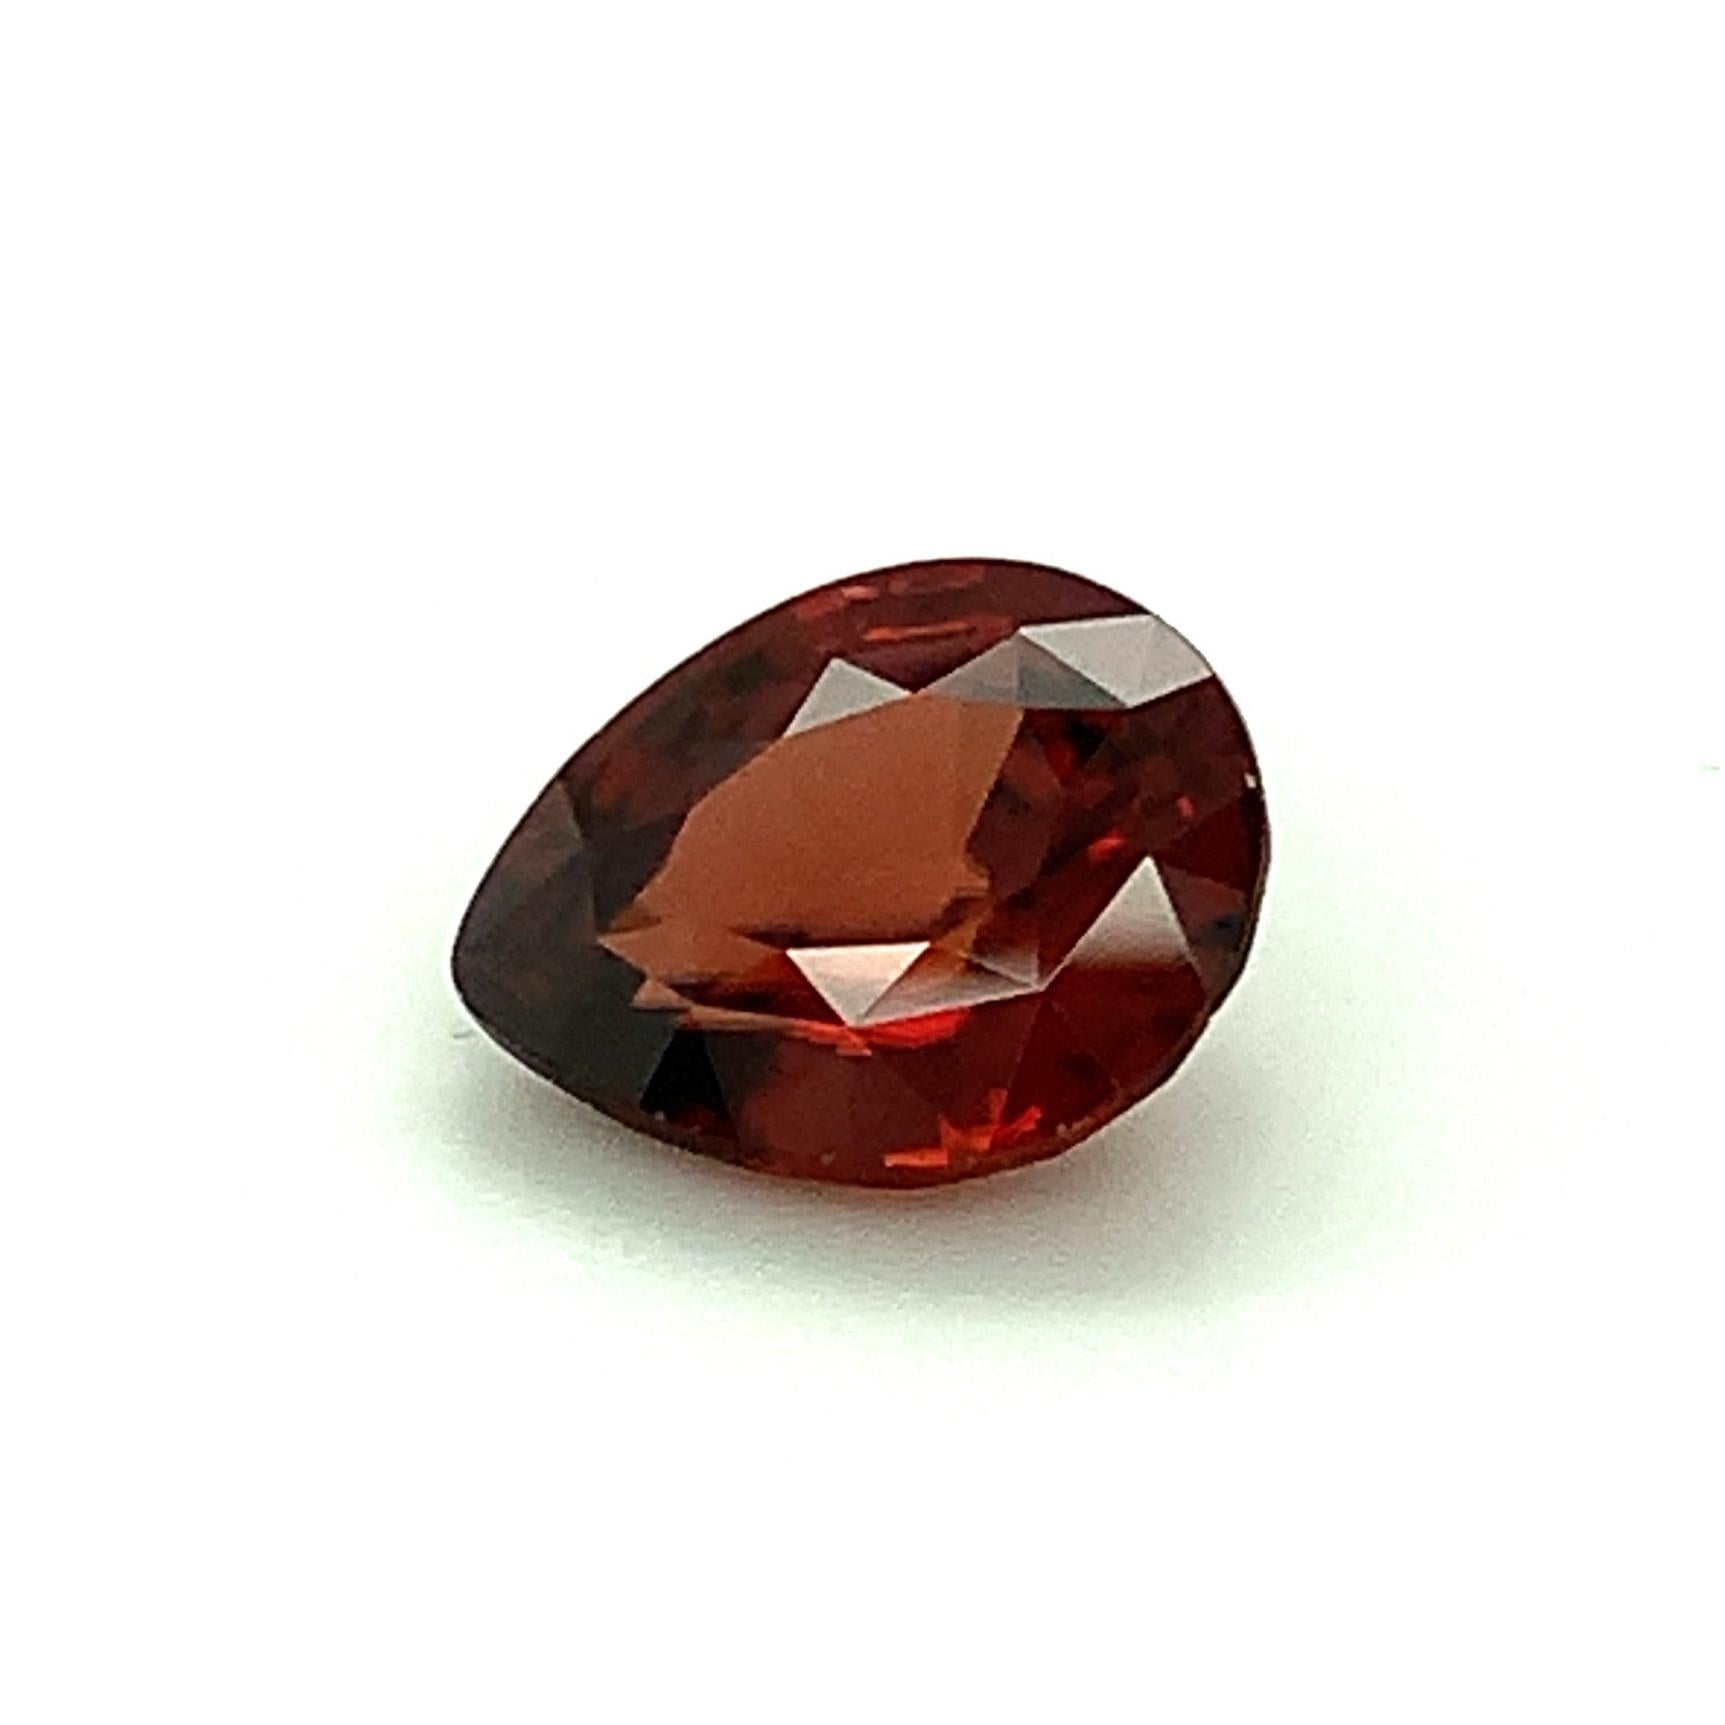 6.25 Carat Red Orange Zircon Pear, Unset Loose Gemstone For Sale 1